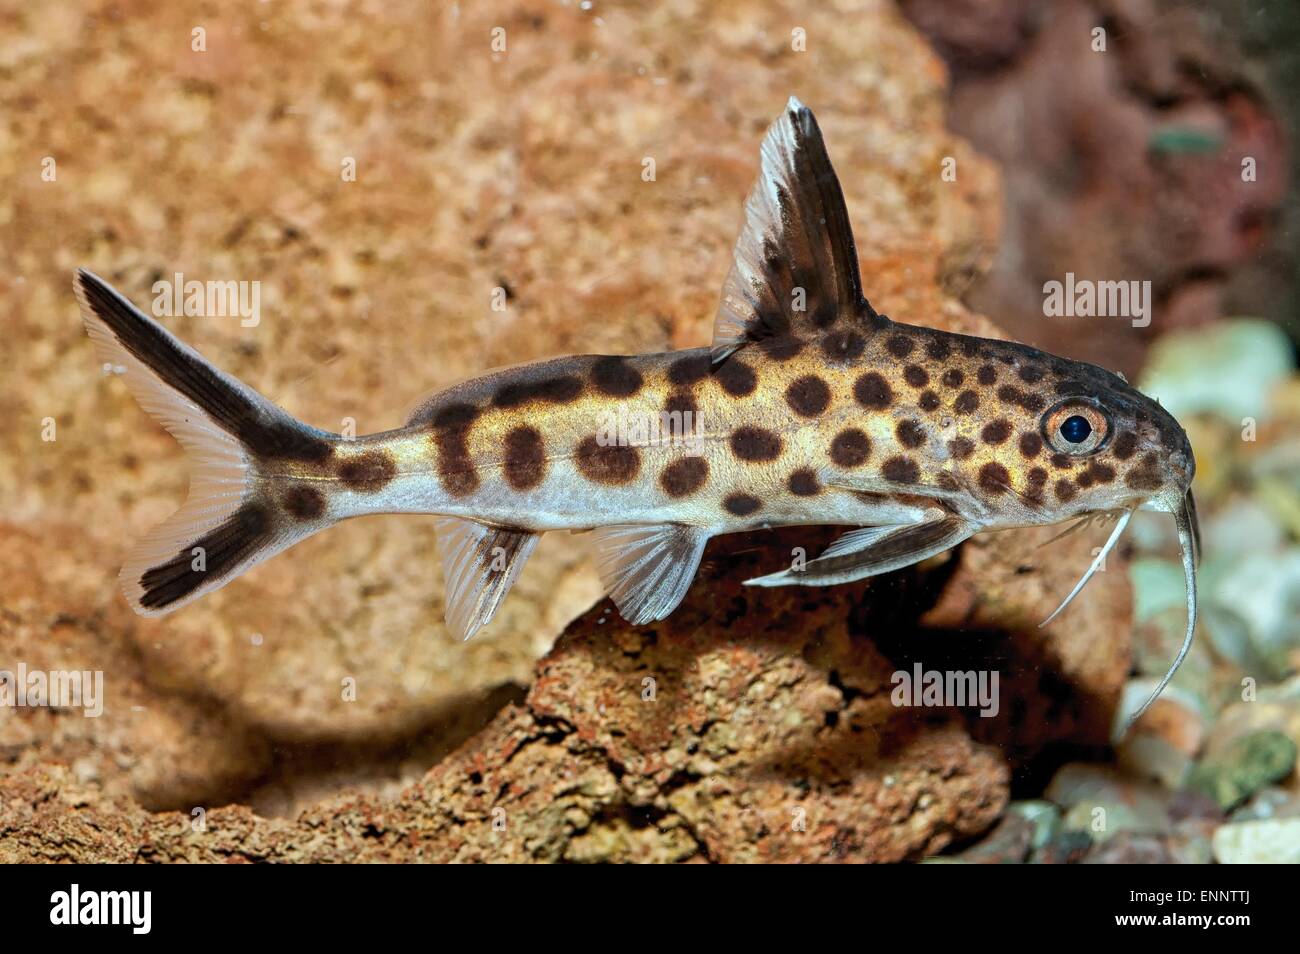 Tropical freshwater aquarium fish from genus Synodontis. Stock Photo